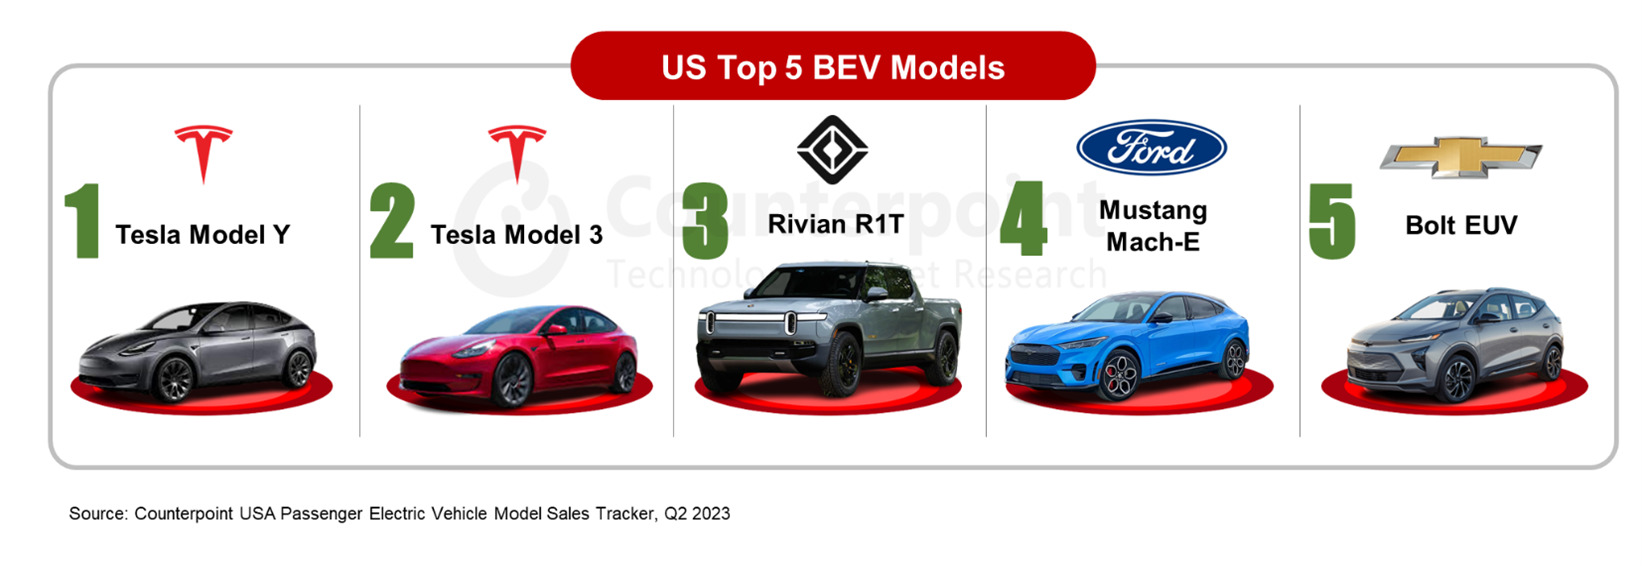 US top 5 BEV models